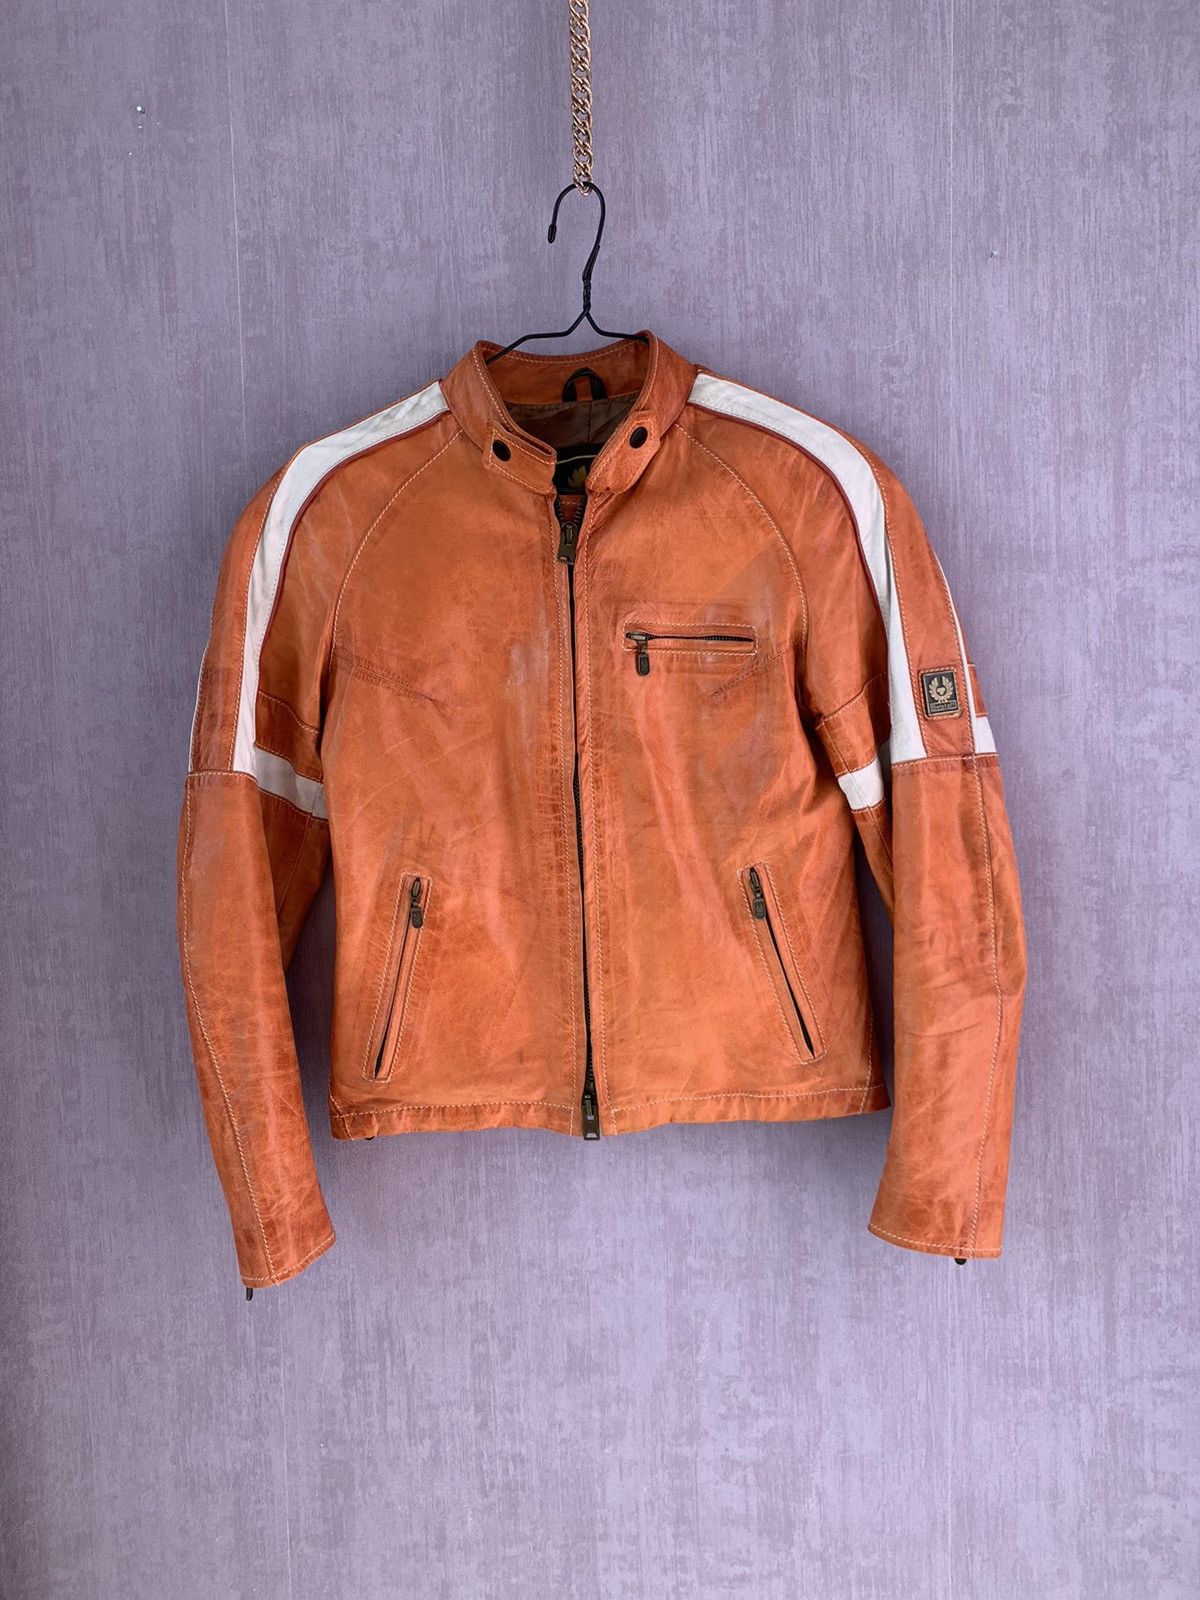 Belstaff Belstaff HERO Leather Jacket (Tom Cruise War Of The Worlds) Size US S / EU 44-46 / 1 - 1 Preview